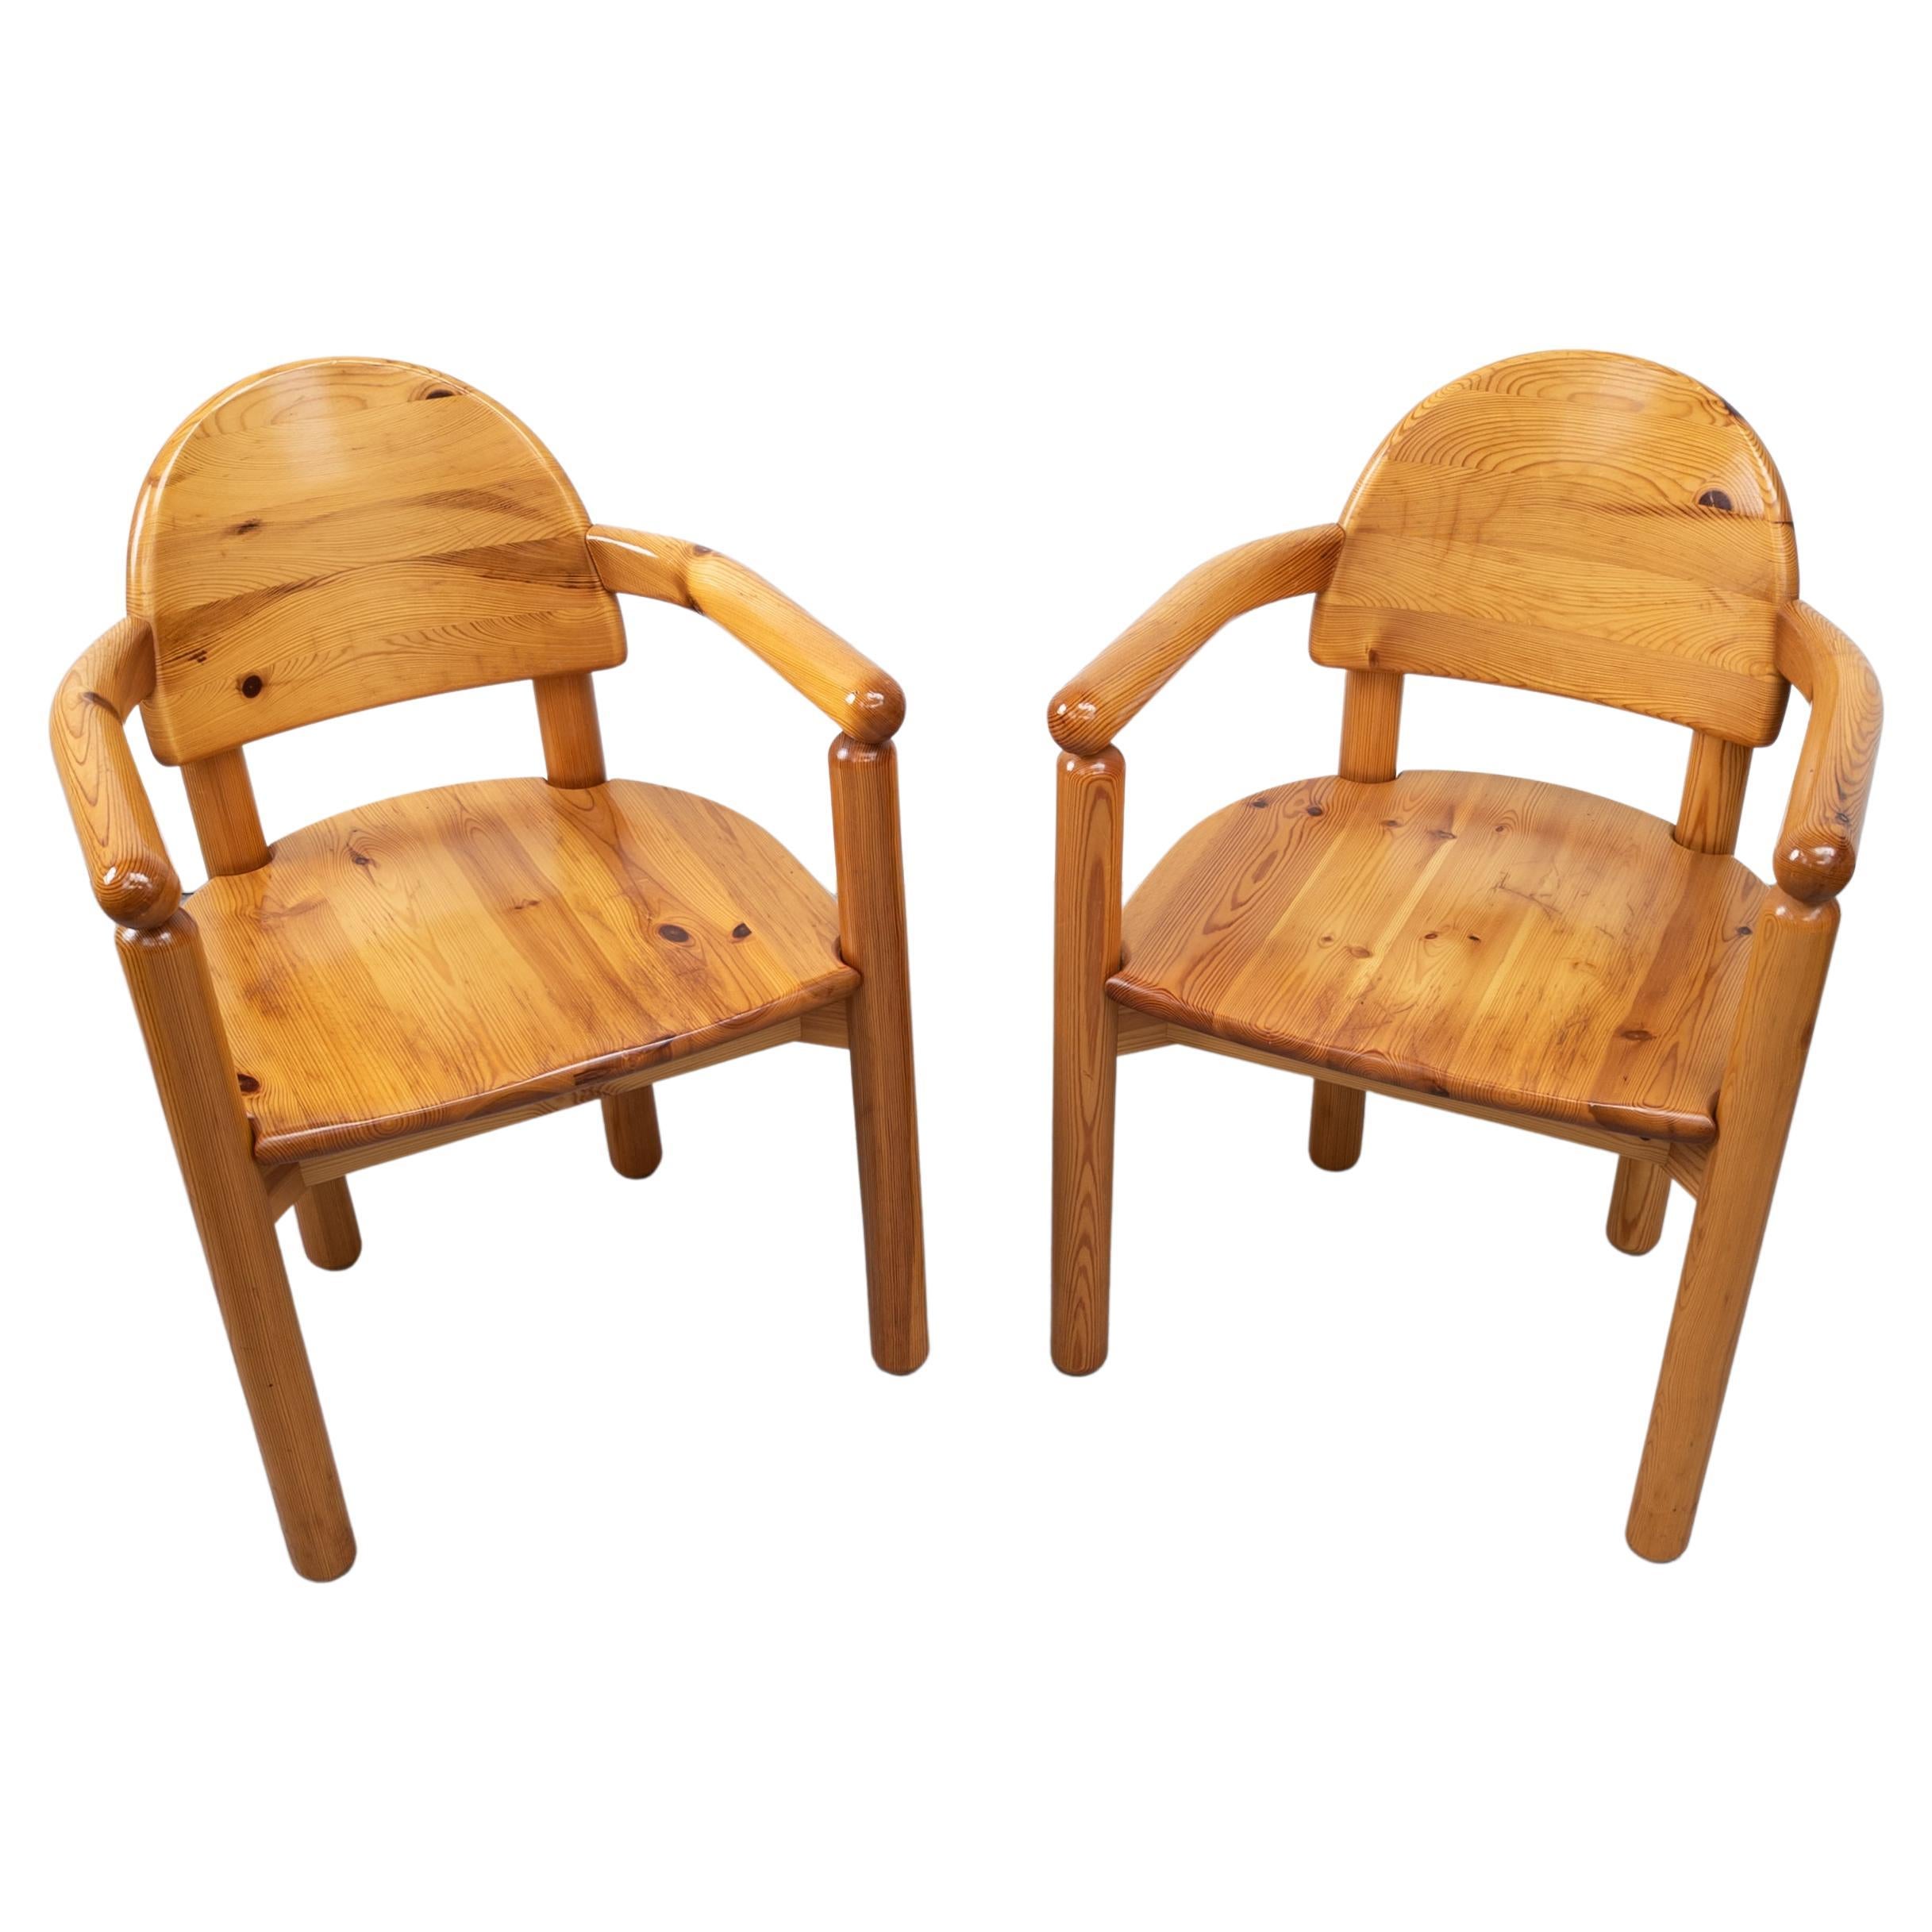 Pair of Vintage Pine Chairs by Rainer Daumiller for Hirtshals Sawmill, Denmark 1